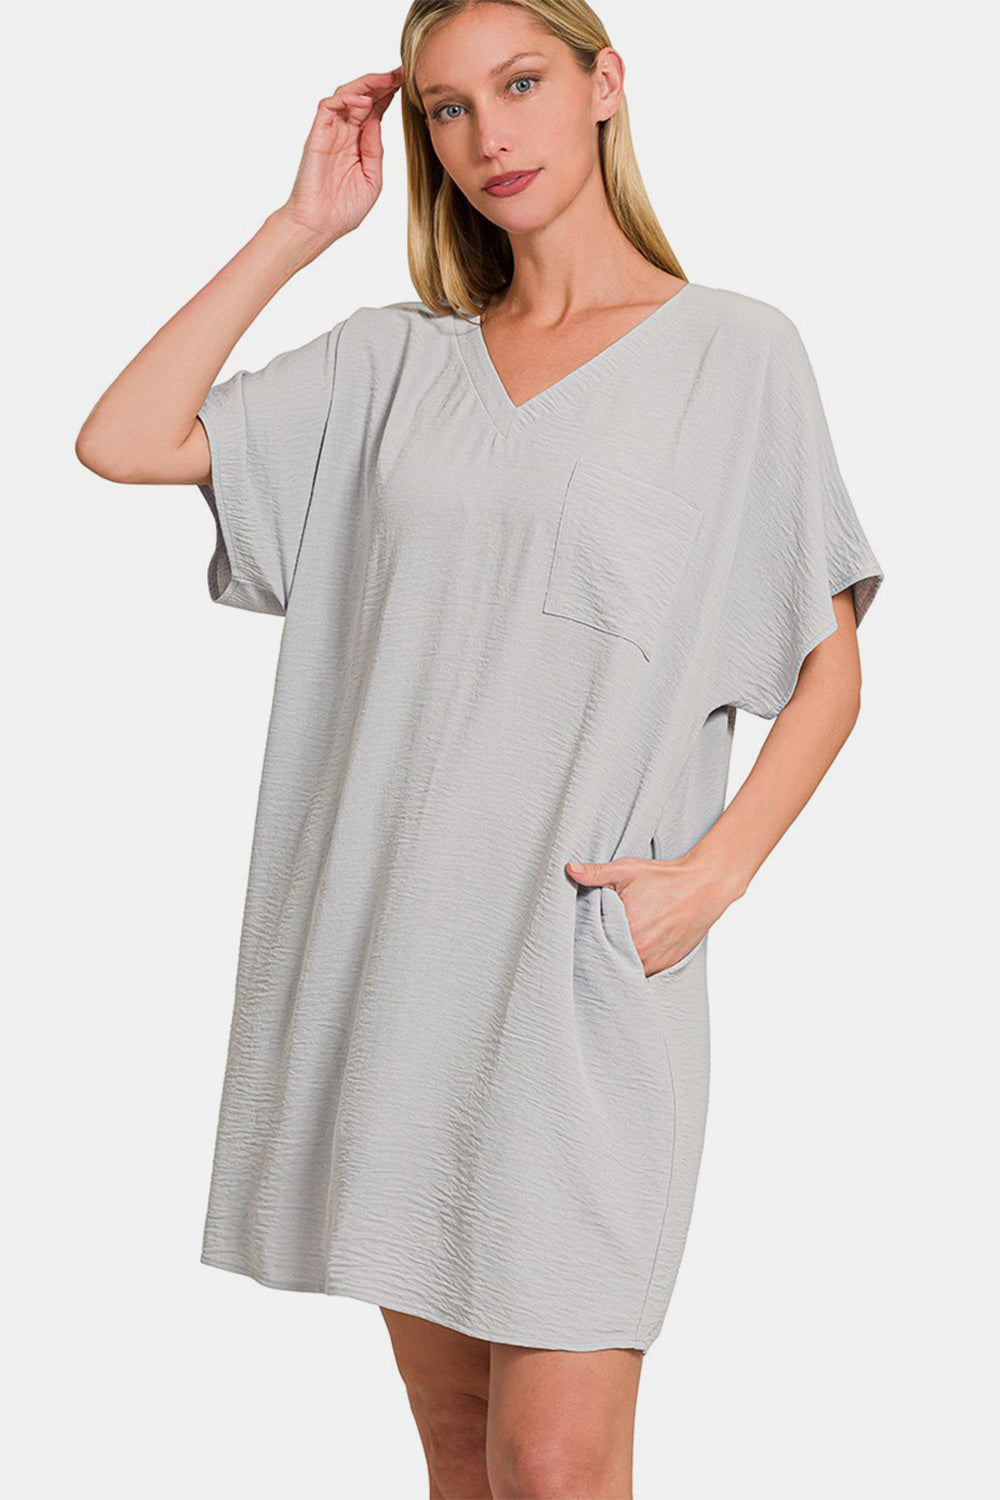 Zenana V-Neck Tee Dress with Pockets - Lt Grey / S - DRESSES - Grey